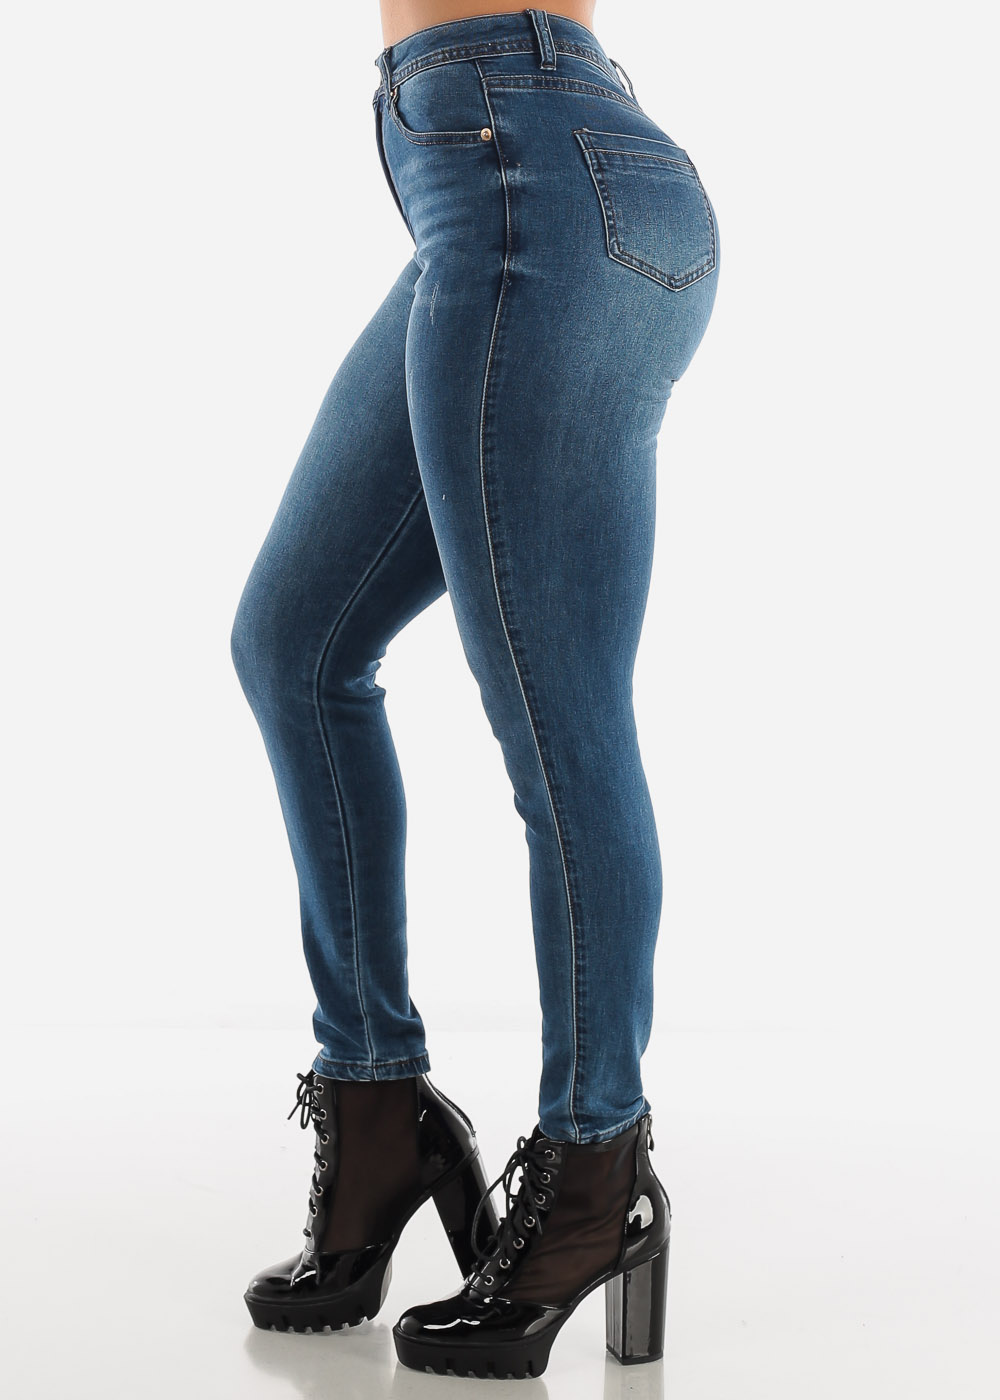 Womens Juniors High Waisted Dark Skinny Jeans - 5 Pocket Denim Jeans - Stretchy Denim Pants 11068O - image 2 of 3